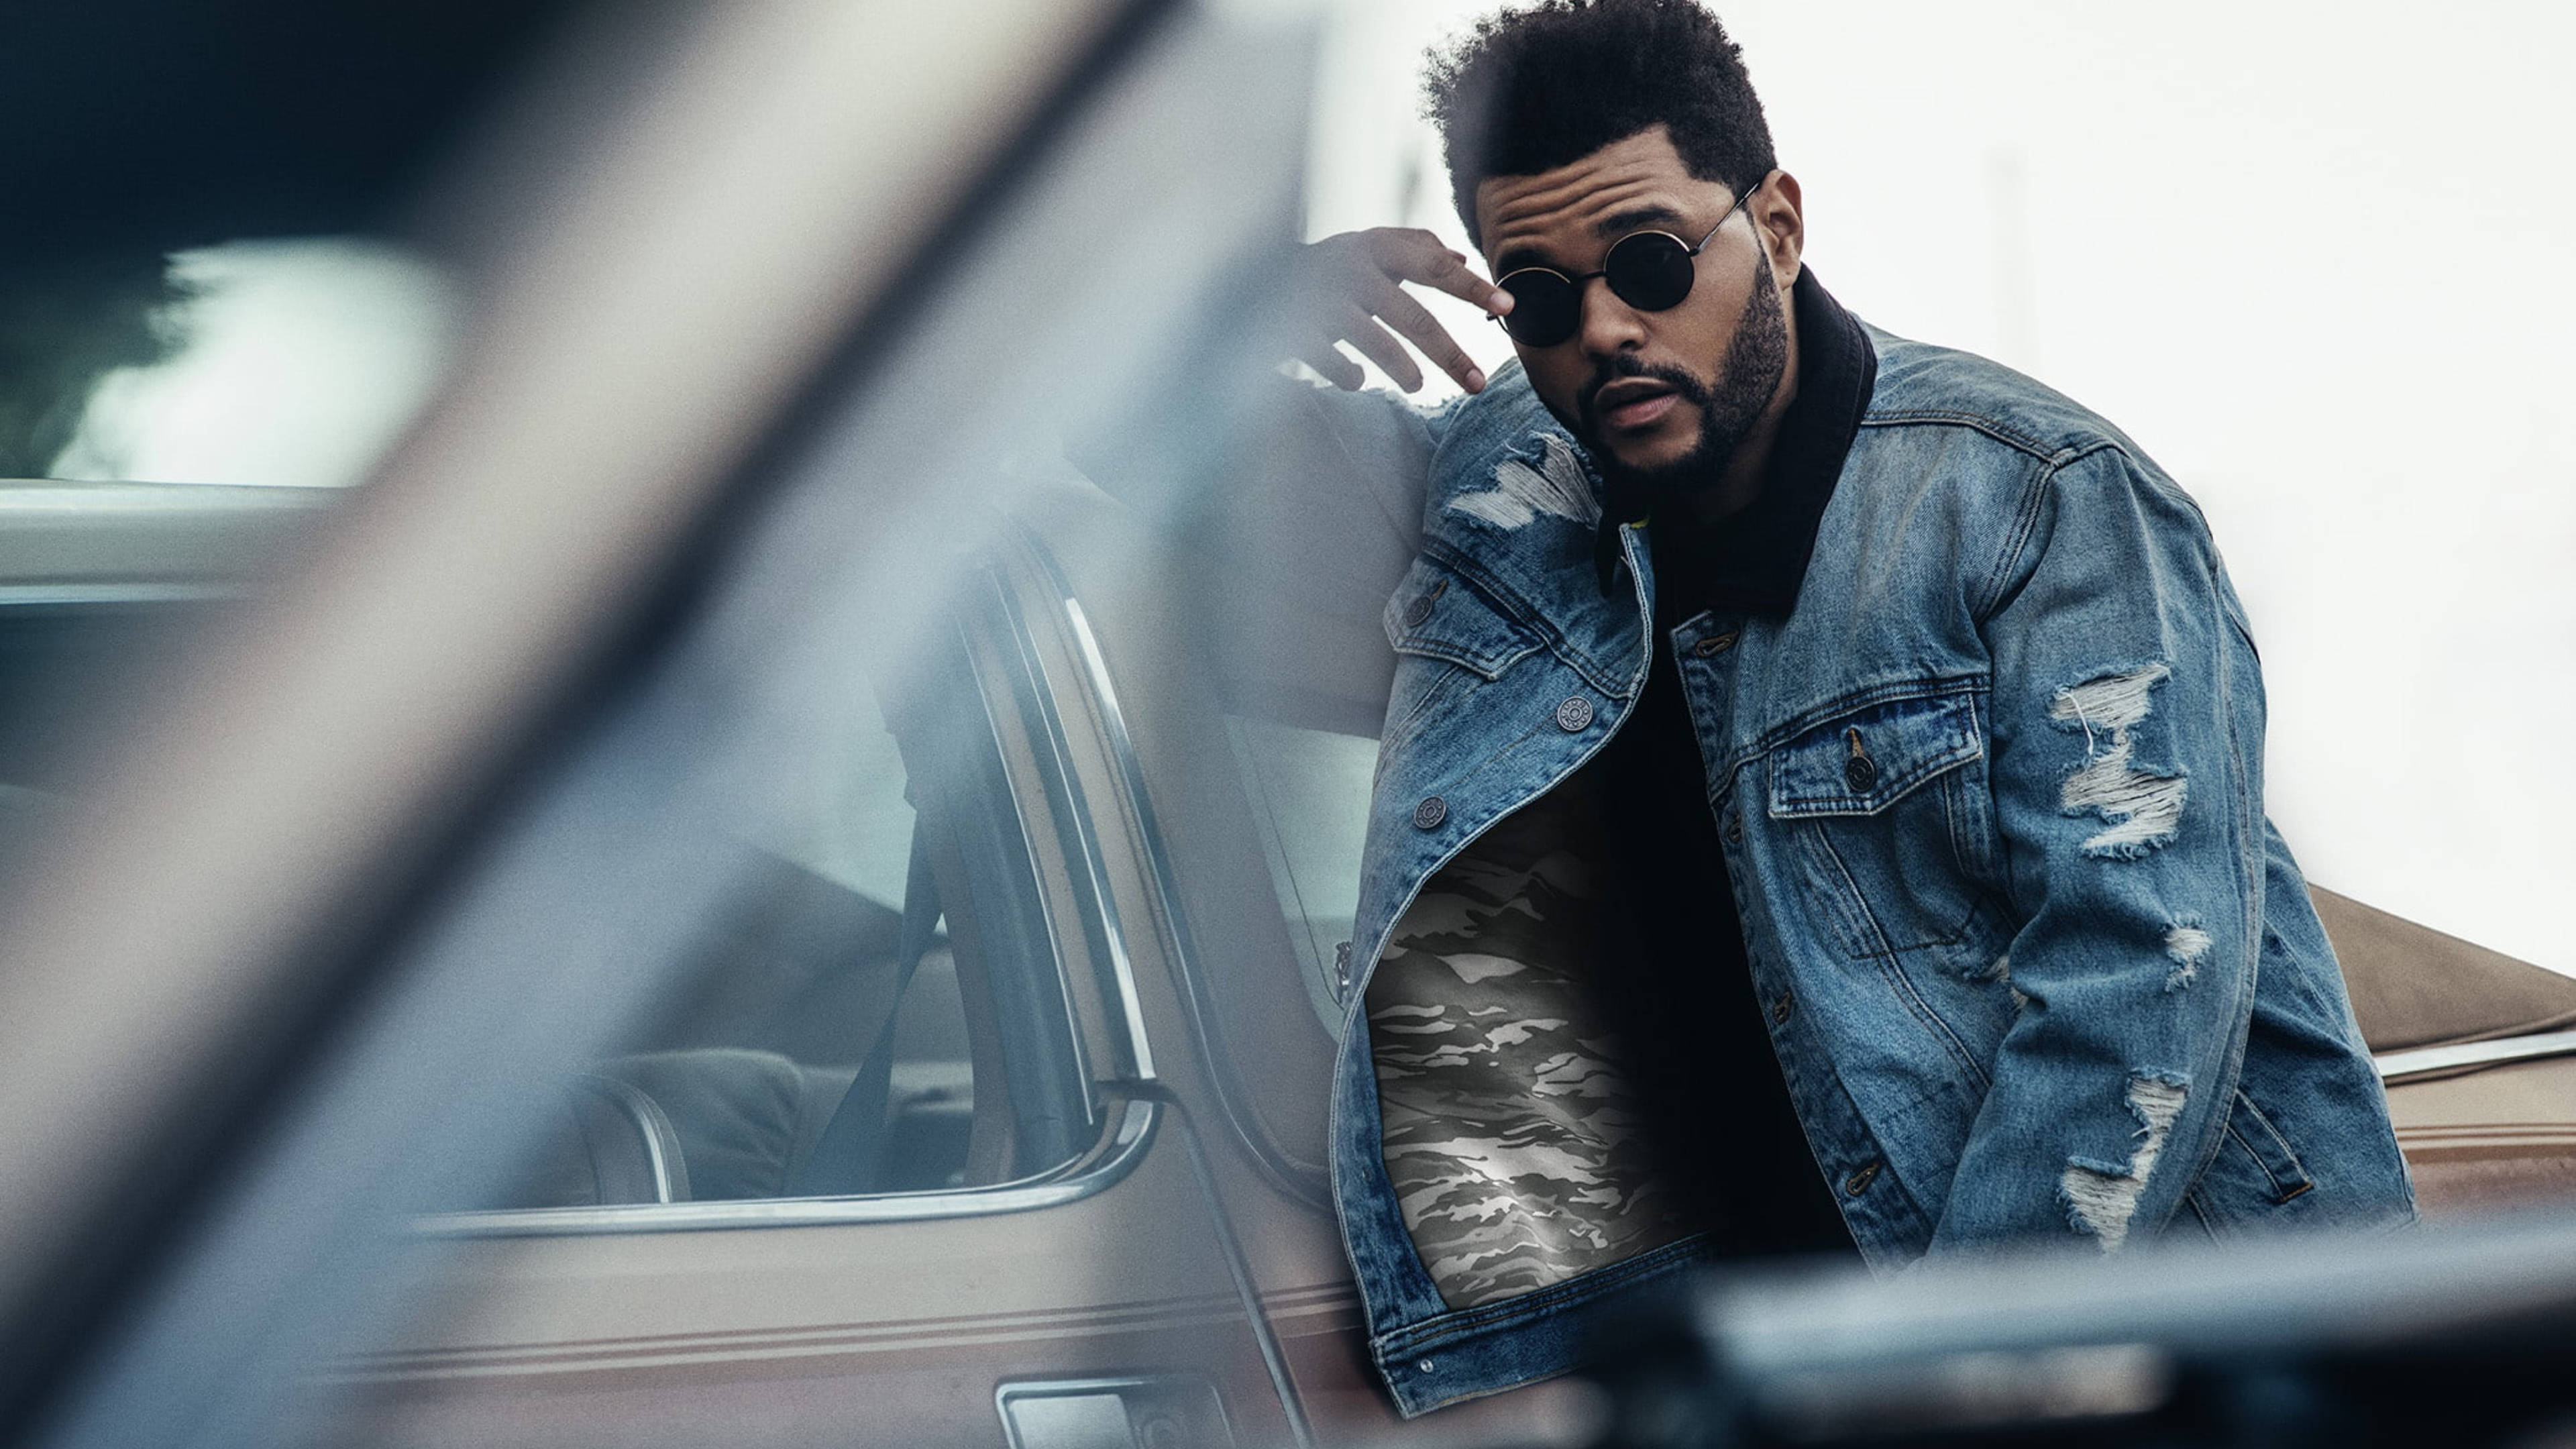 Download The Weeknd In Denim Jacket Wallpaper